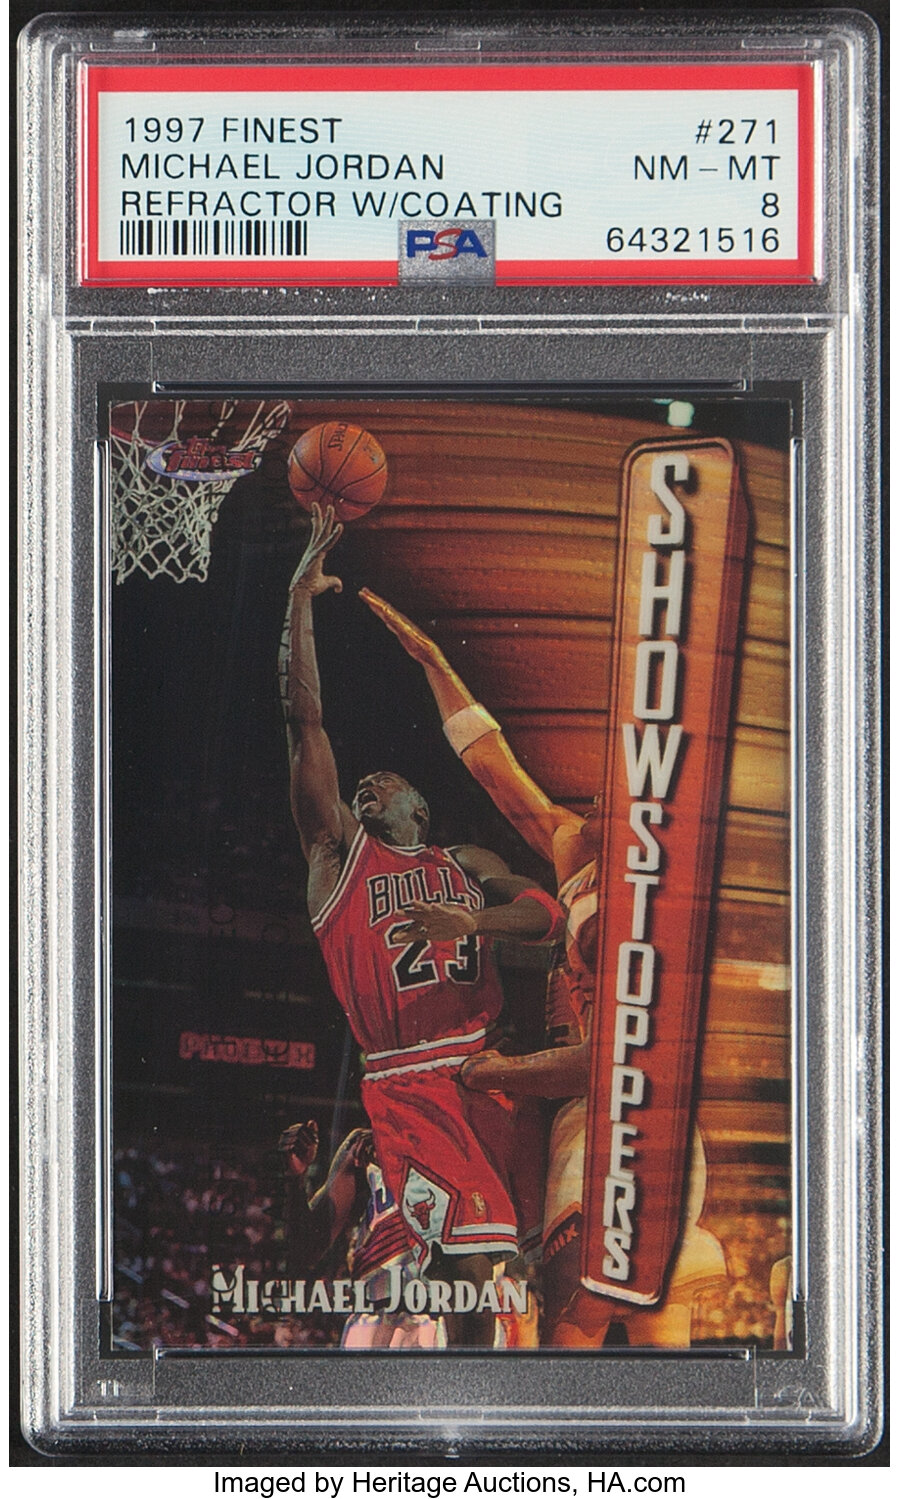 1997 Finest Michael Jordan (Refractor With Coating) #271 PSA NM-MT 8